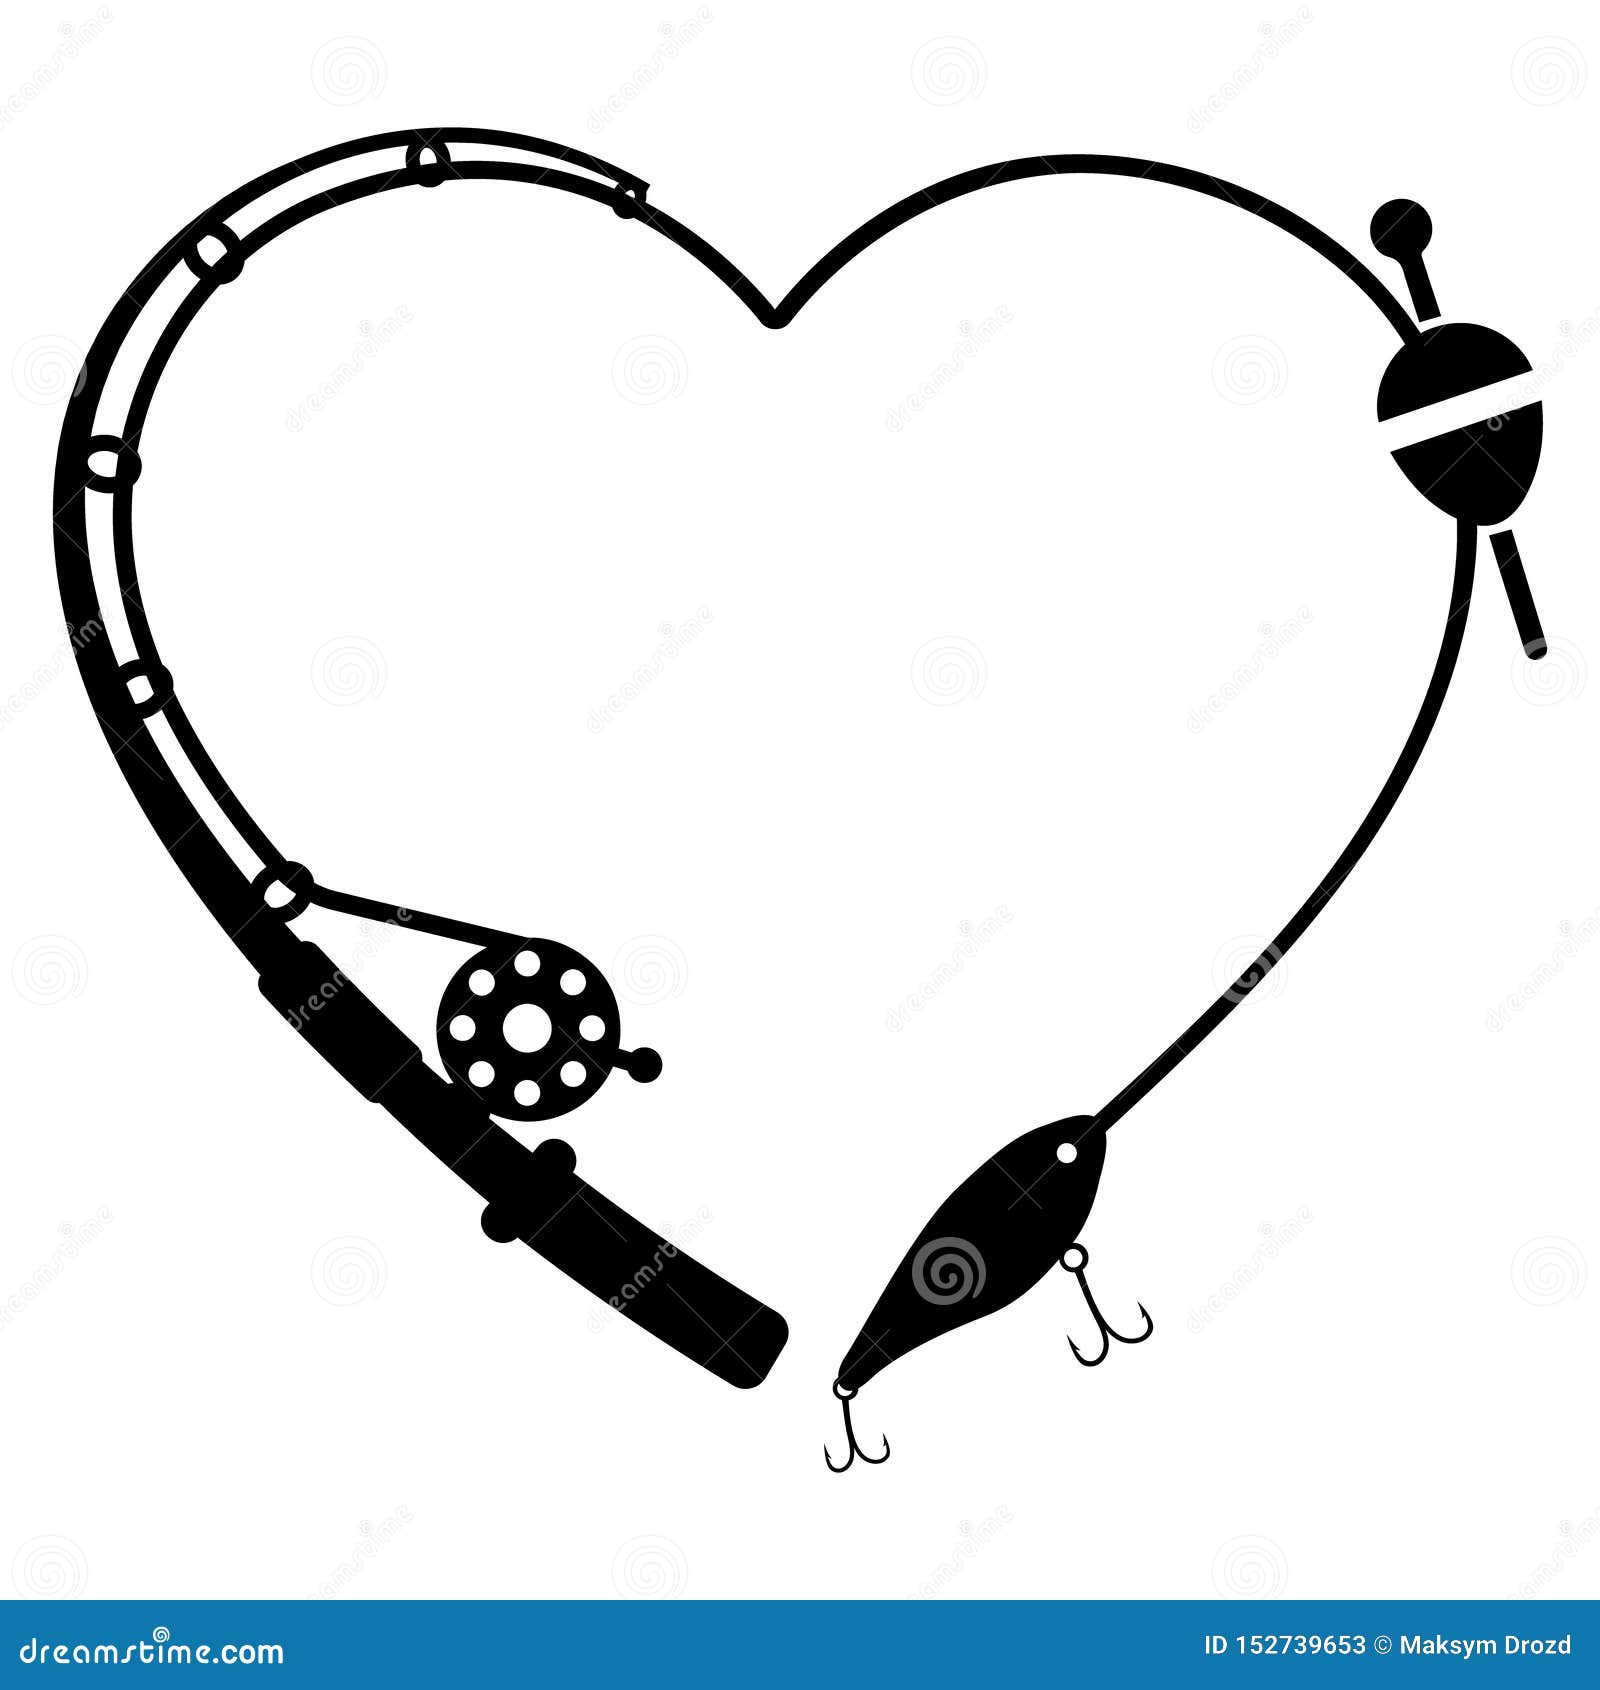 Download Heart Fishing Rod Vector Illustration Stock Vector ...